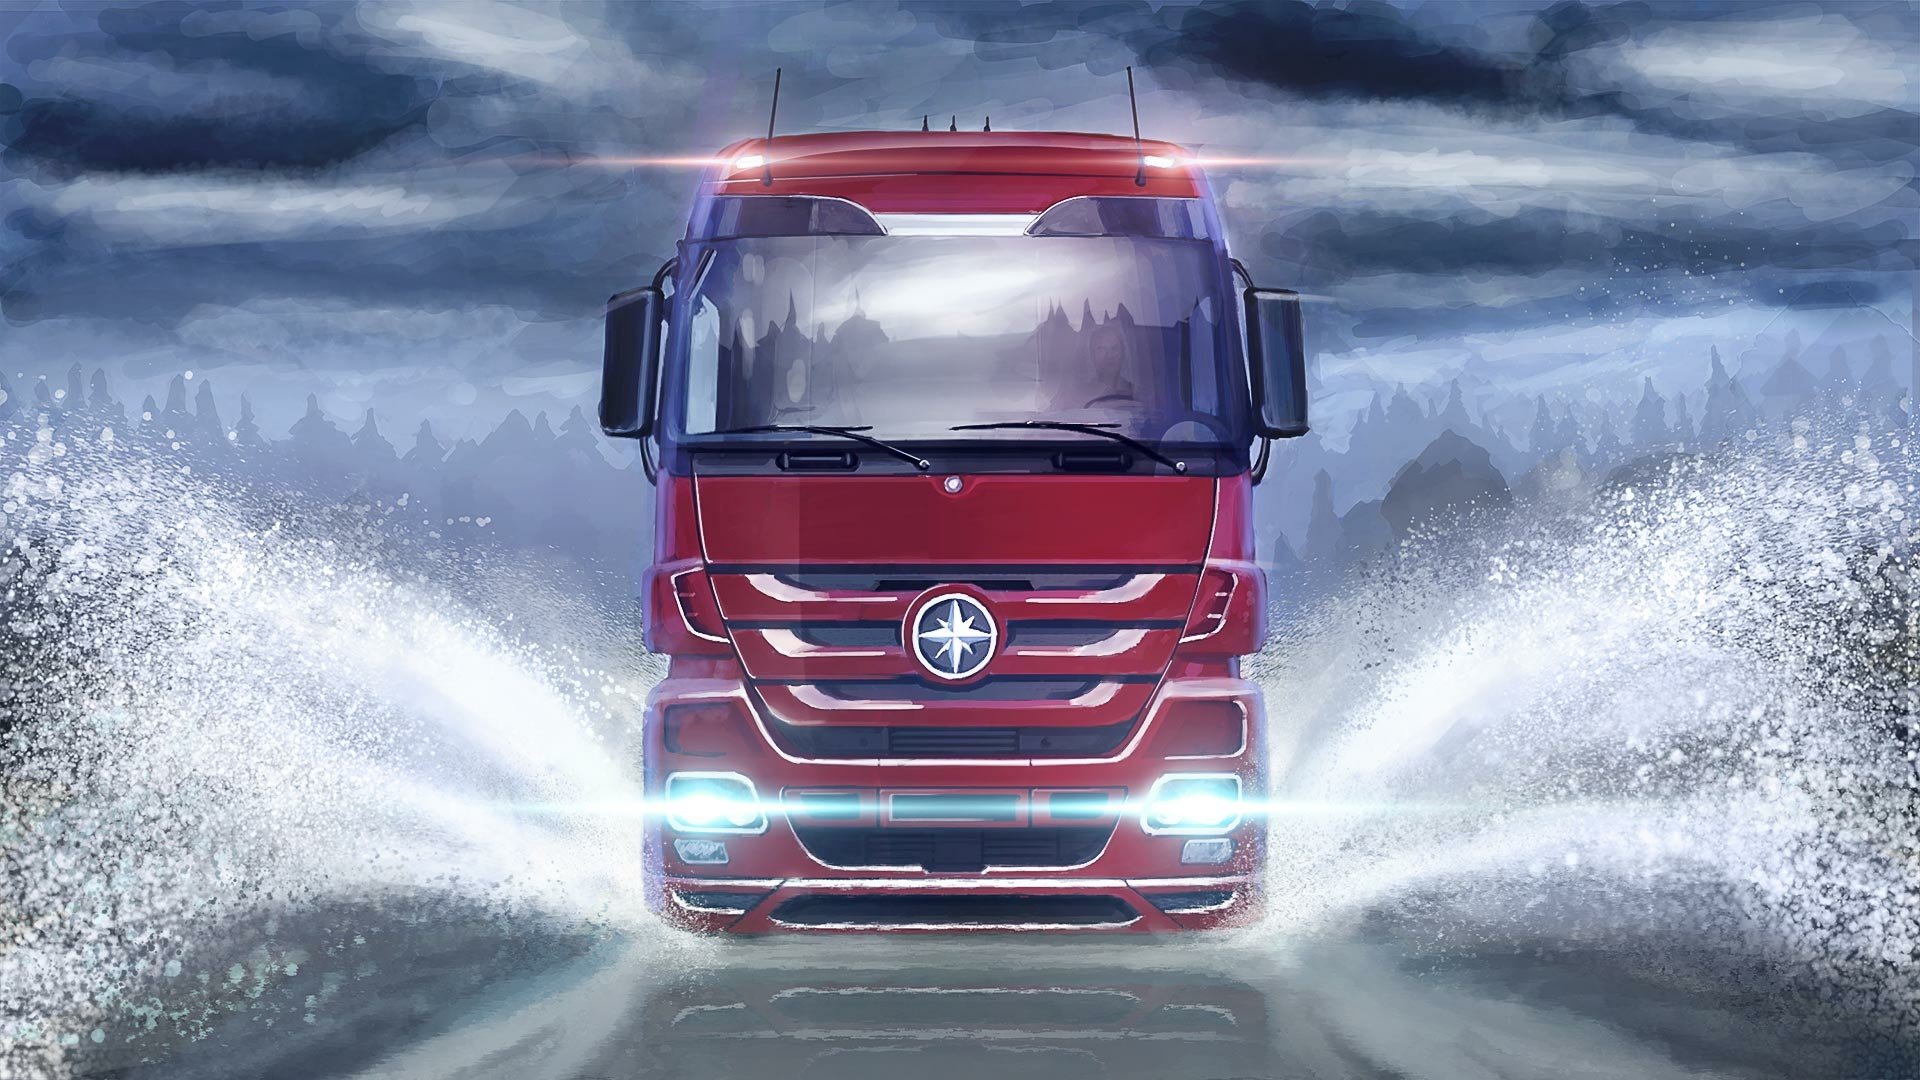 50+ Euro Truck Simulator 2 Wallpaper Hd Scania free download